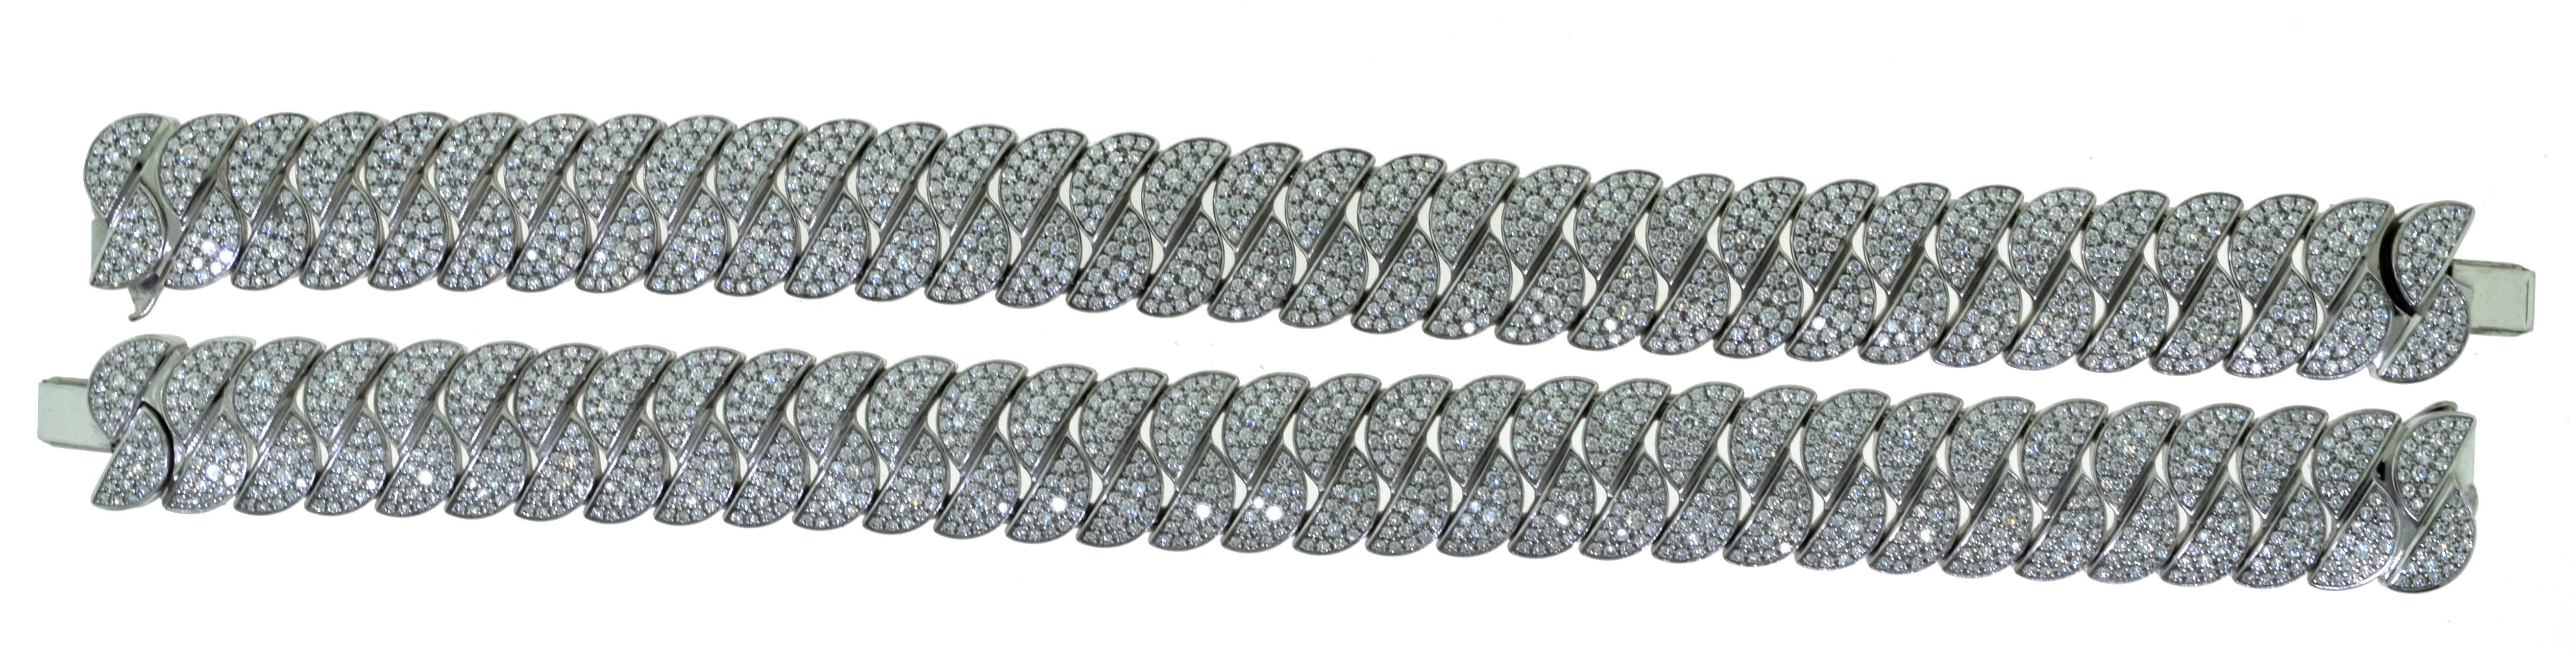 Cartier La Dona Diamond Two Bracelet Pair Set with Certificate For Sale 1